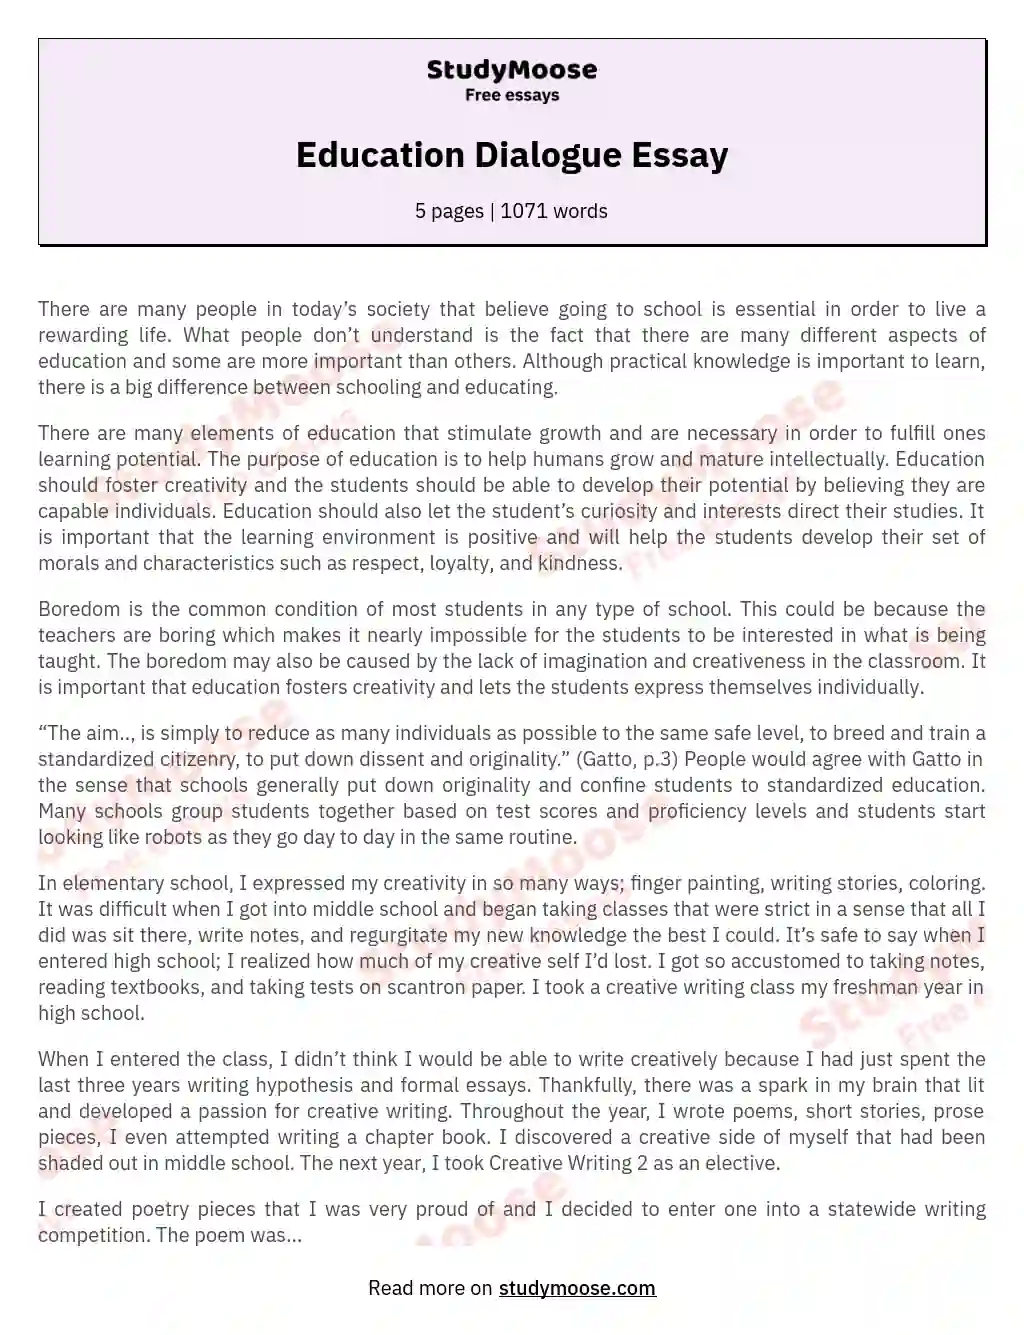 Education Dialogue Essay essay